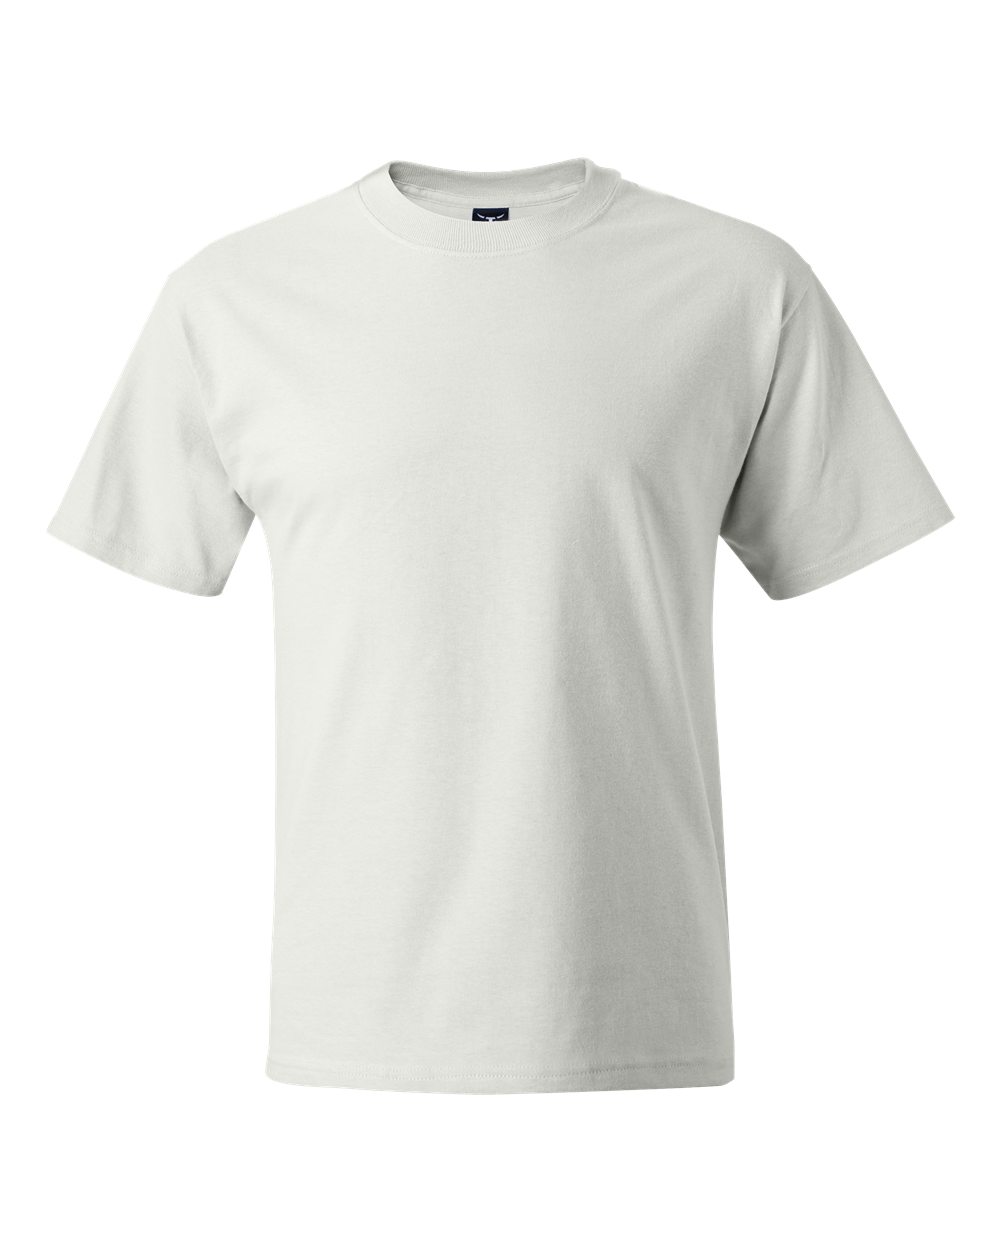 Beefy-T® Short Sleeve T-Shirt - 5180-Hanes